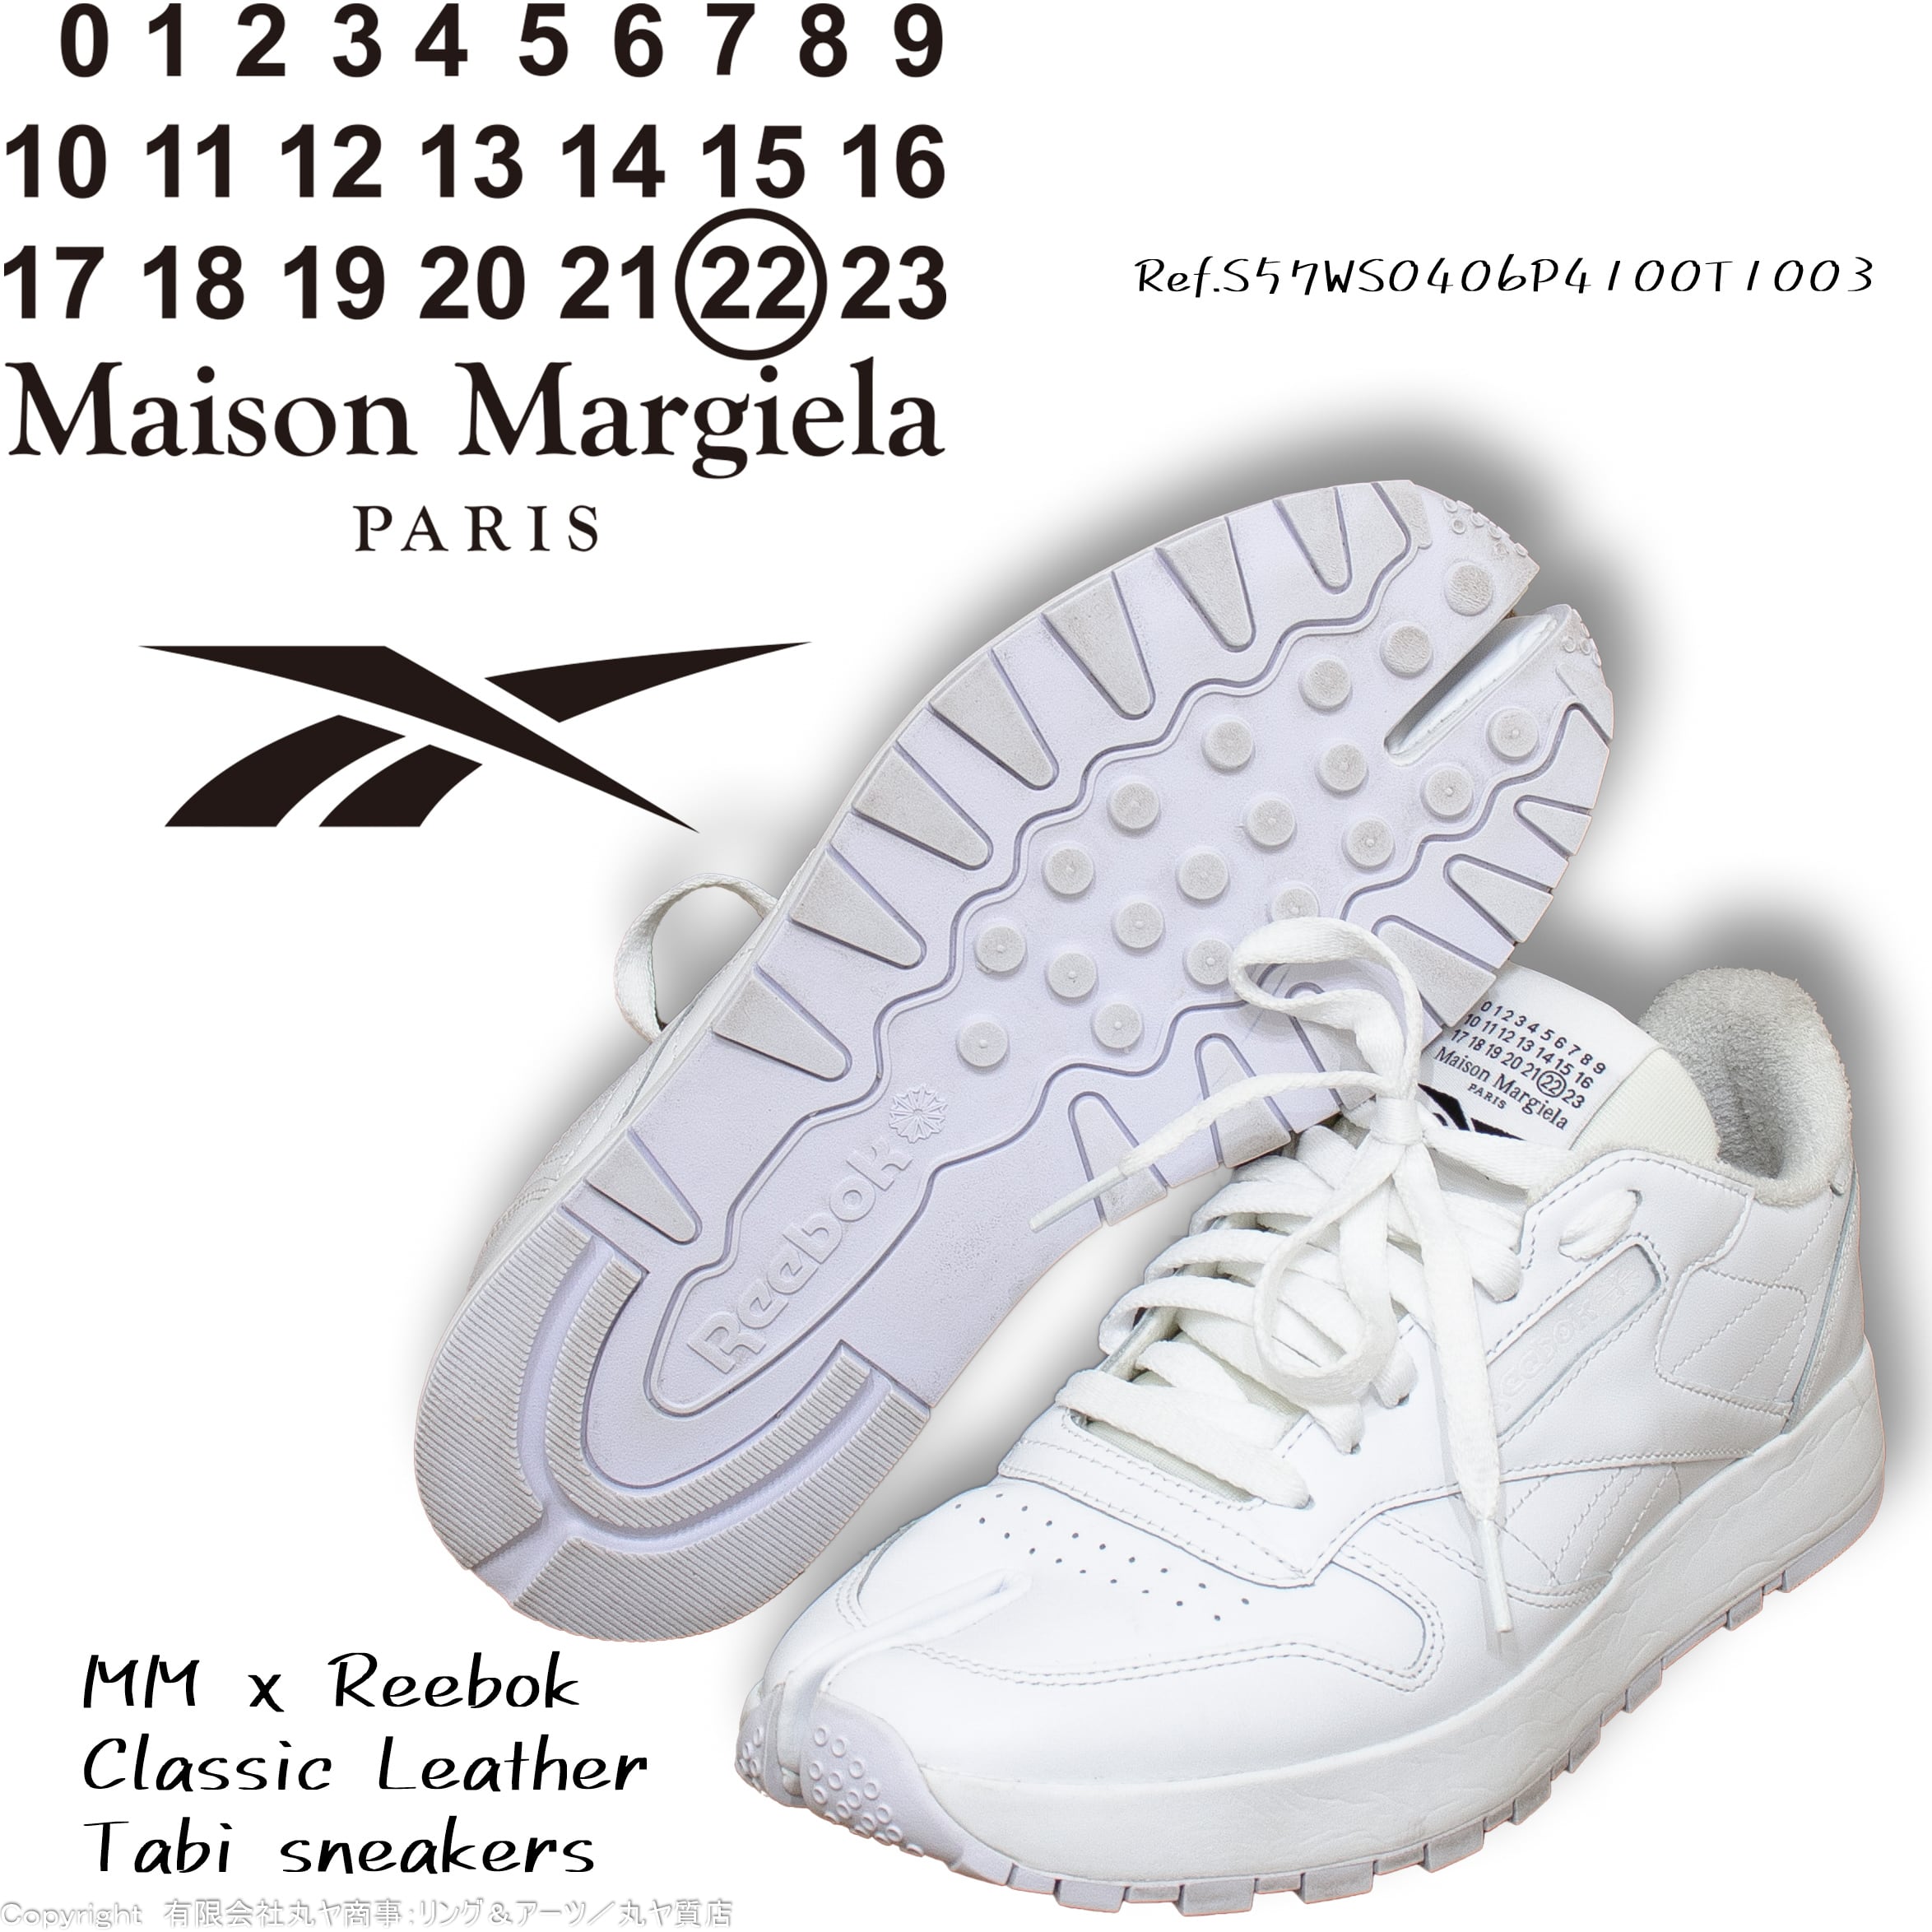 Maison Margiela x Reebok/Classic Leather